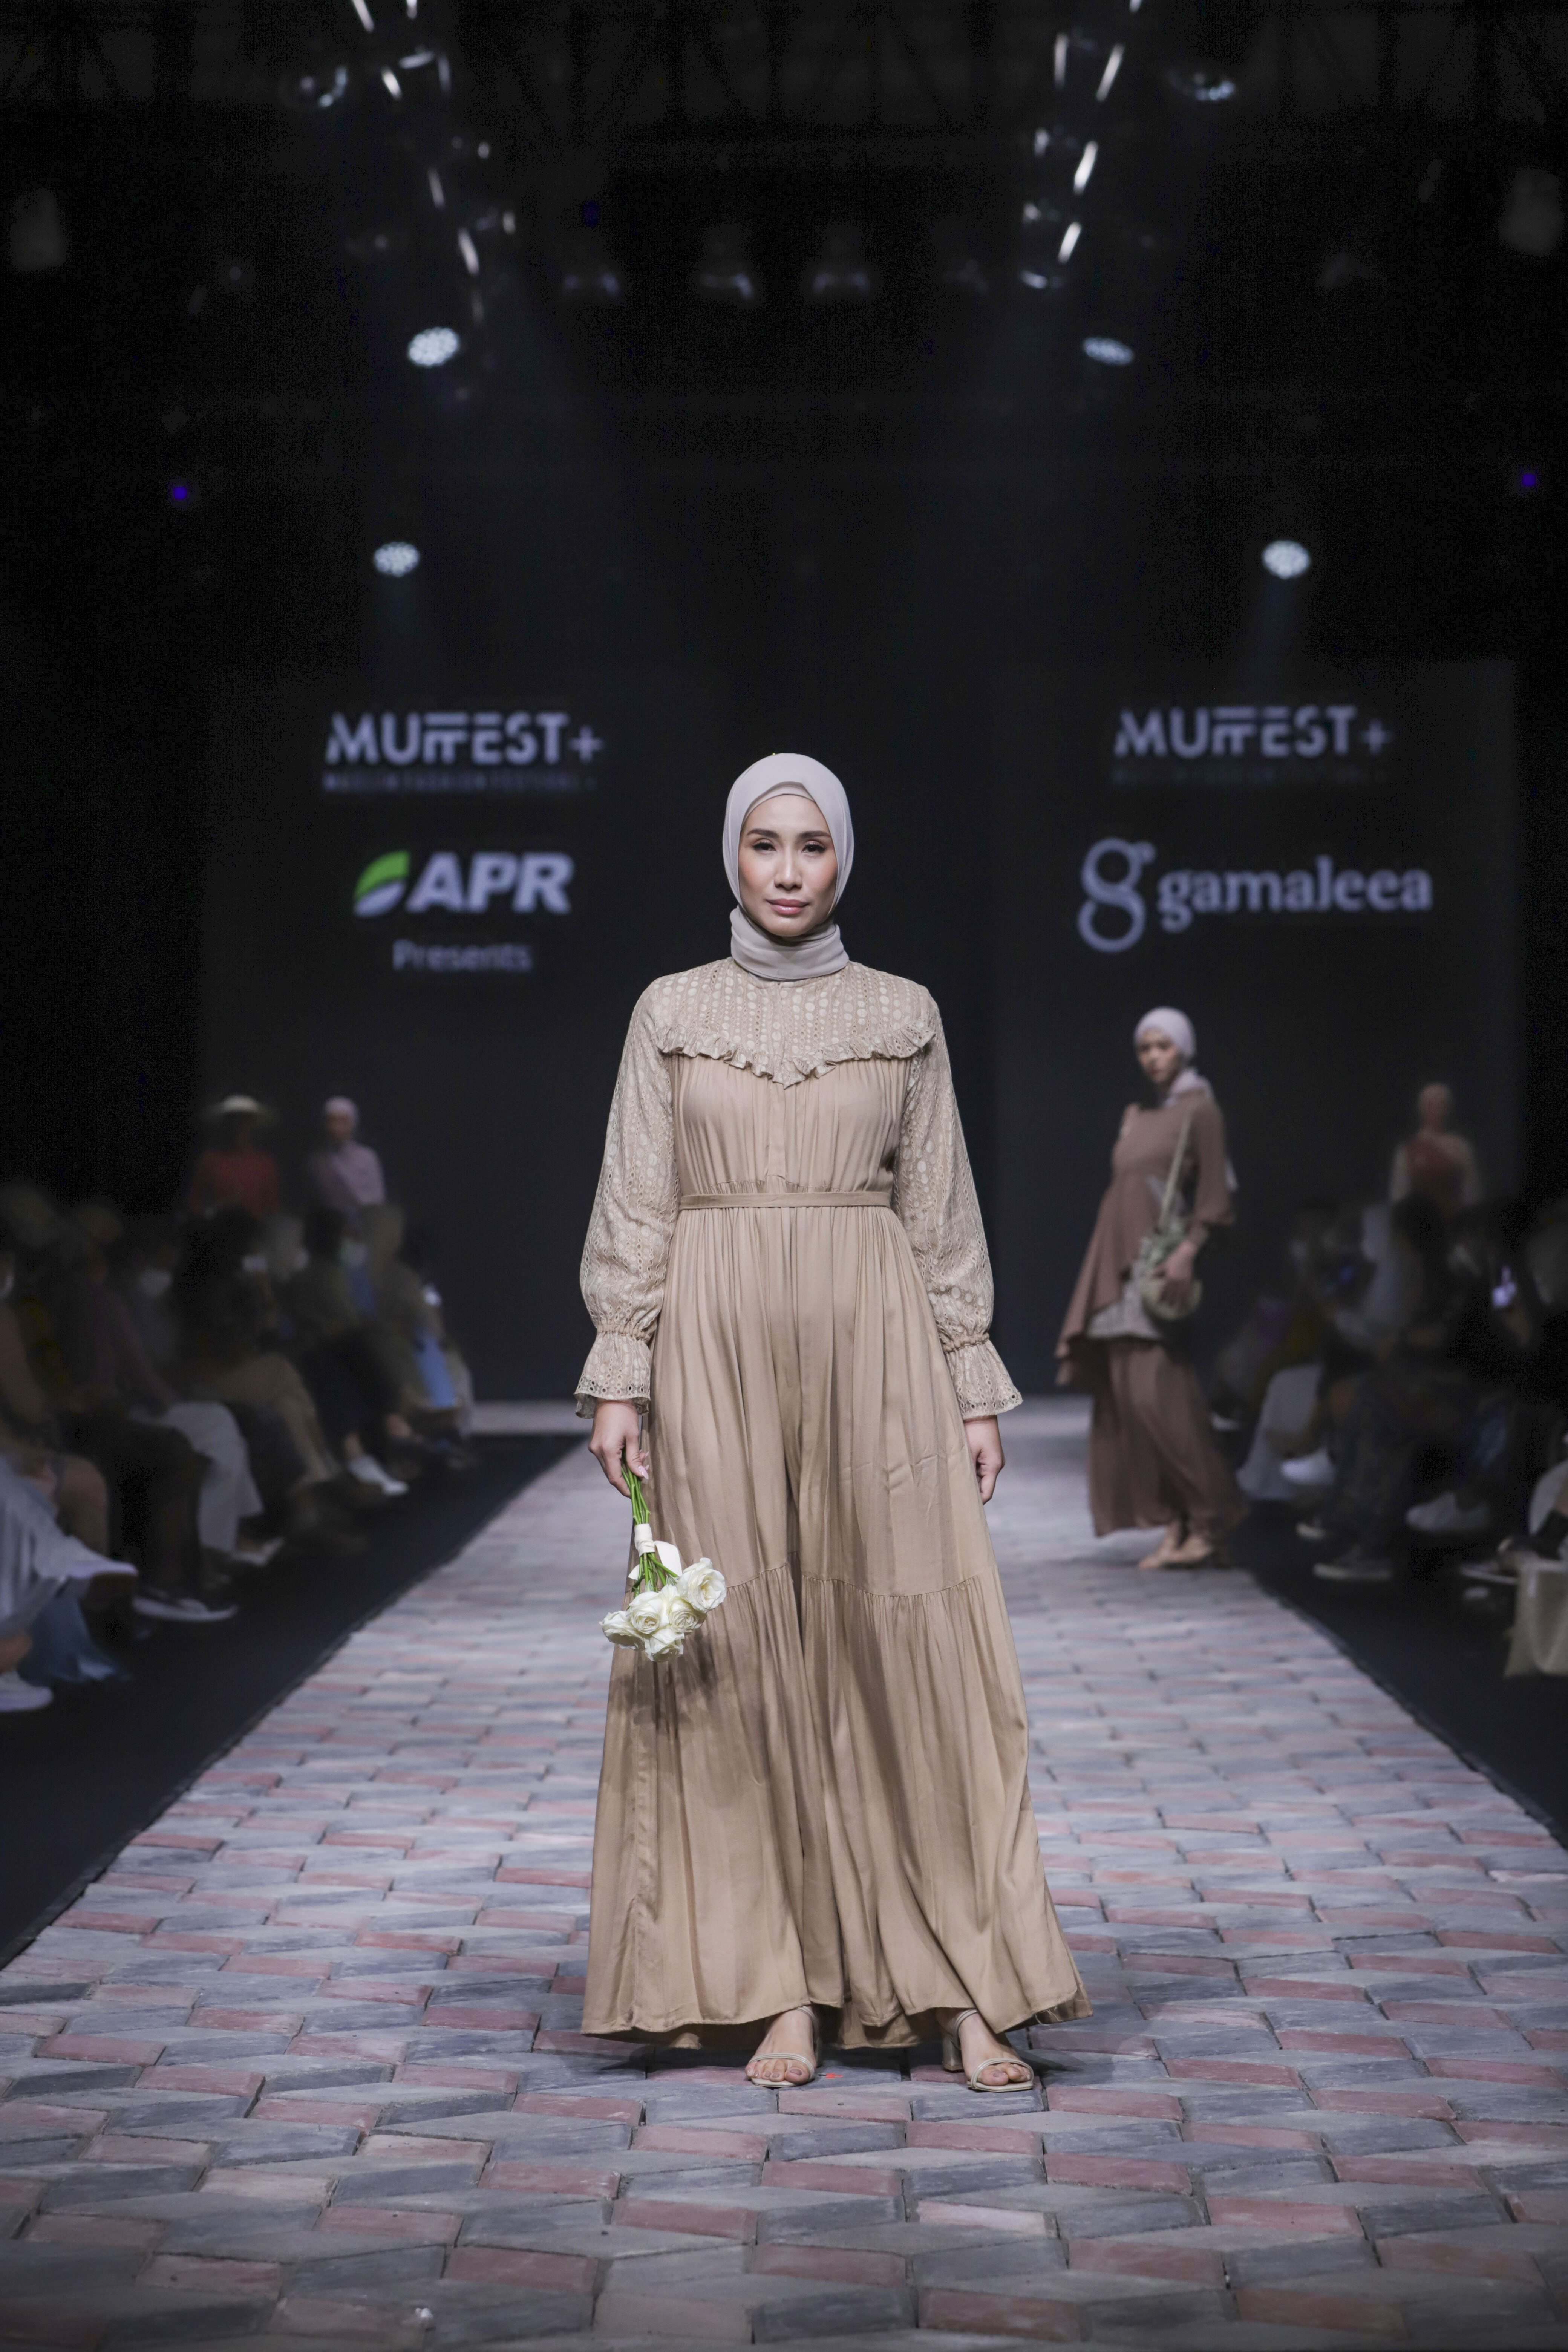 Model pakaian beraksen romantis dari Gamaleea dalam Sustainable Modest Fashion, Muslim Fashion Festival (MUFFEST+) 2022, Kamis (21/04/2022). (Sumber: MUFFEST+ 2022)